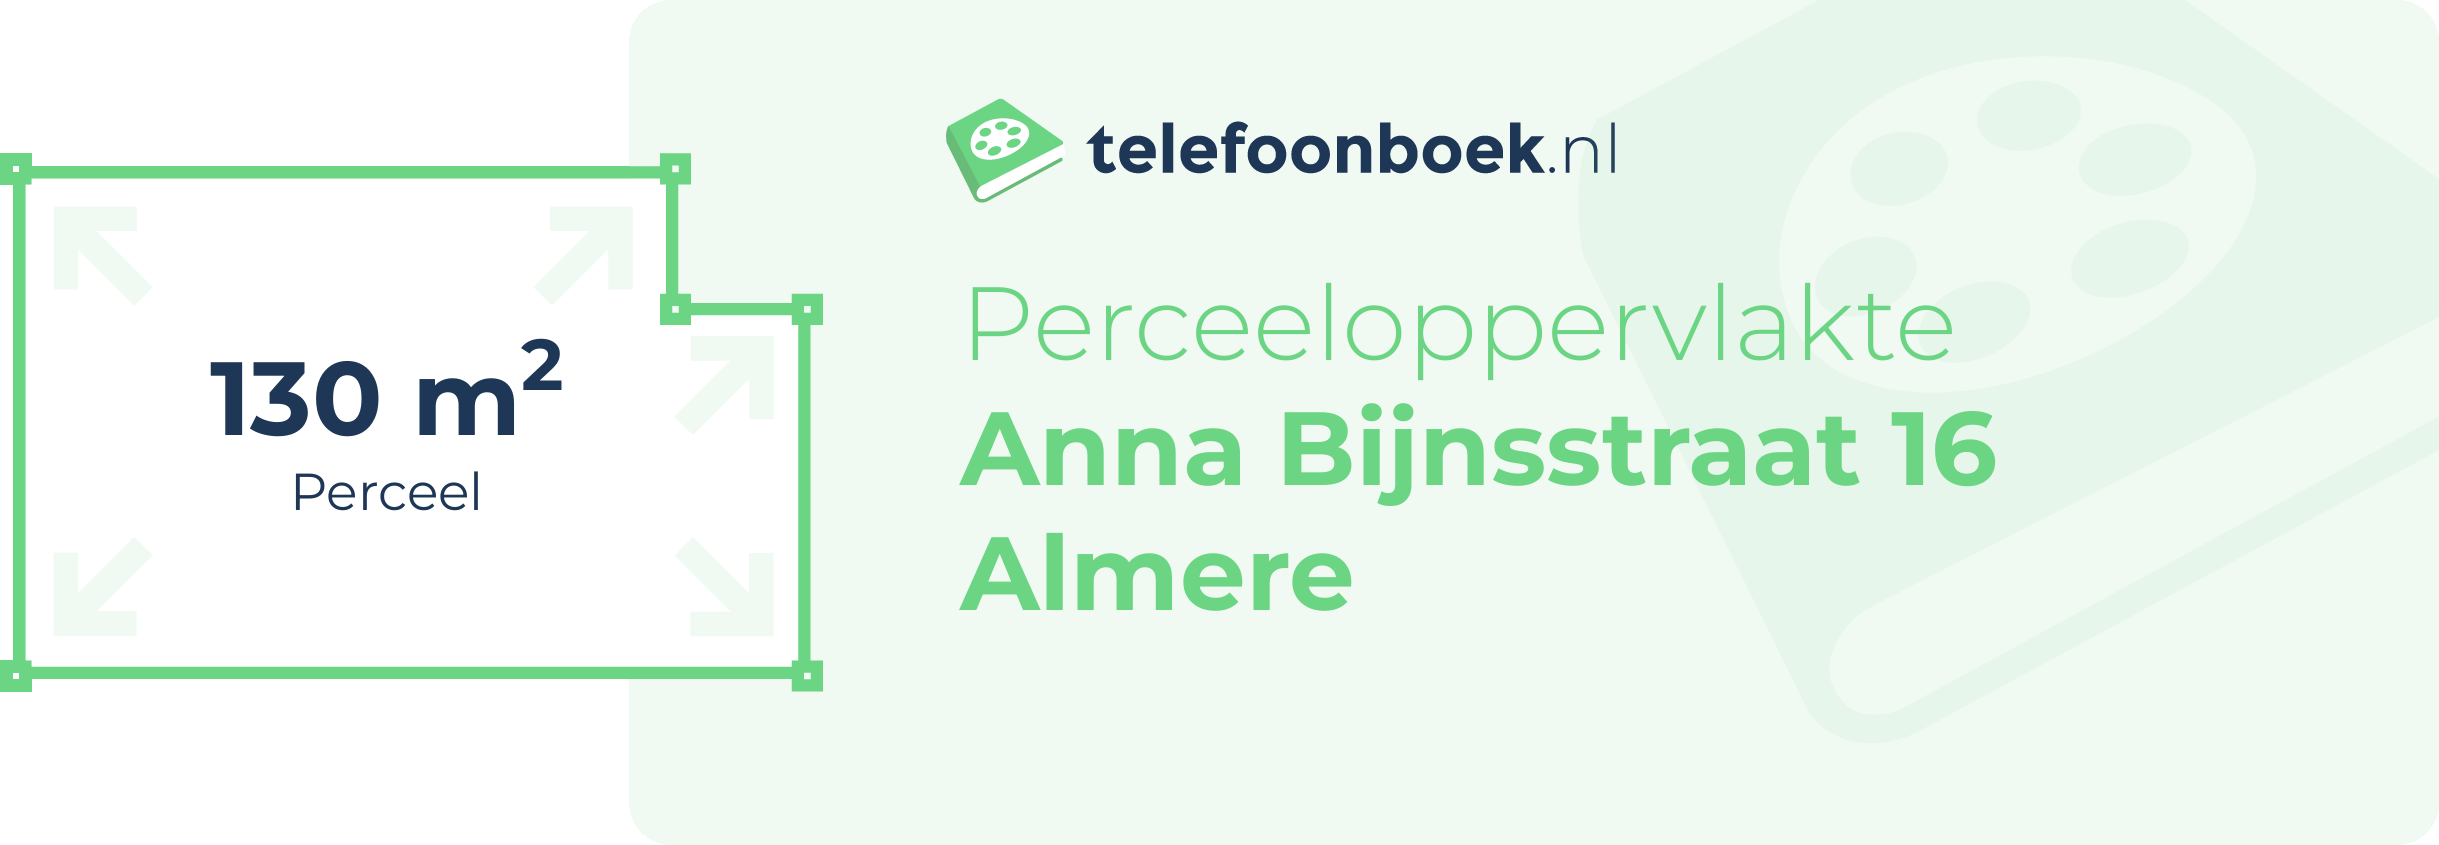 Perceeloppervlakte Anna Bijnsstraat 16 Almere